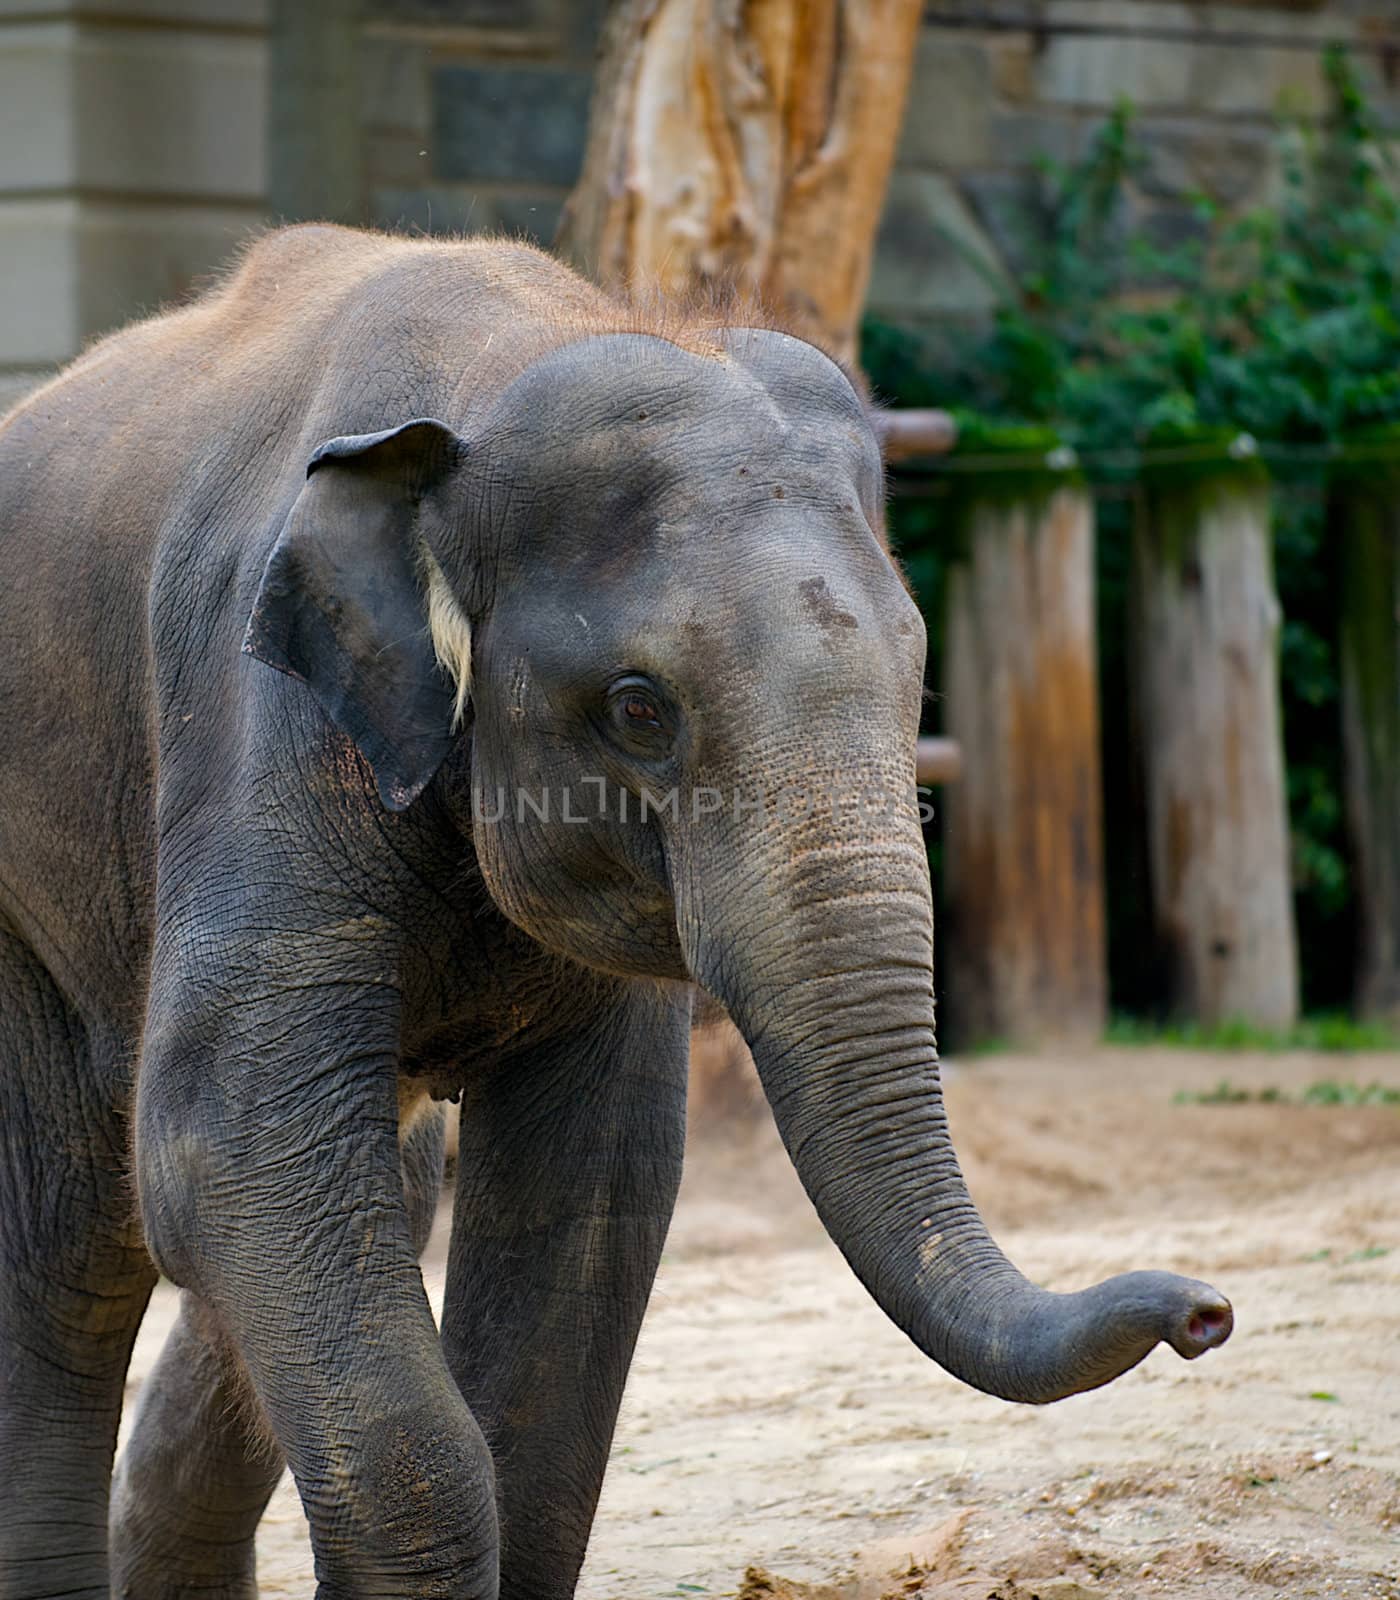 Elephant swinging his trunk while wandering around.